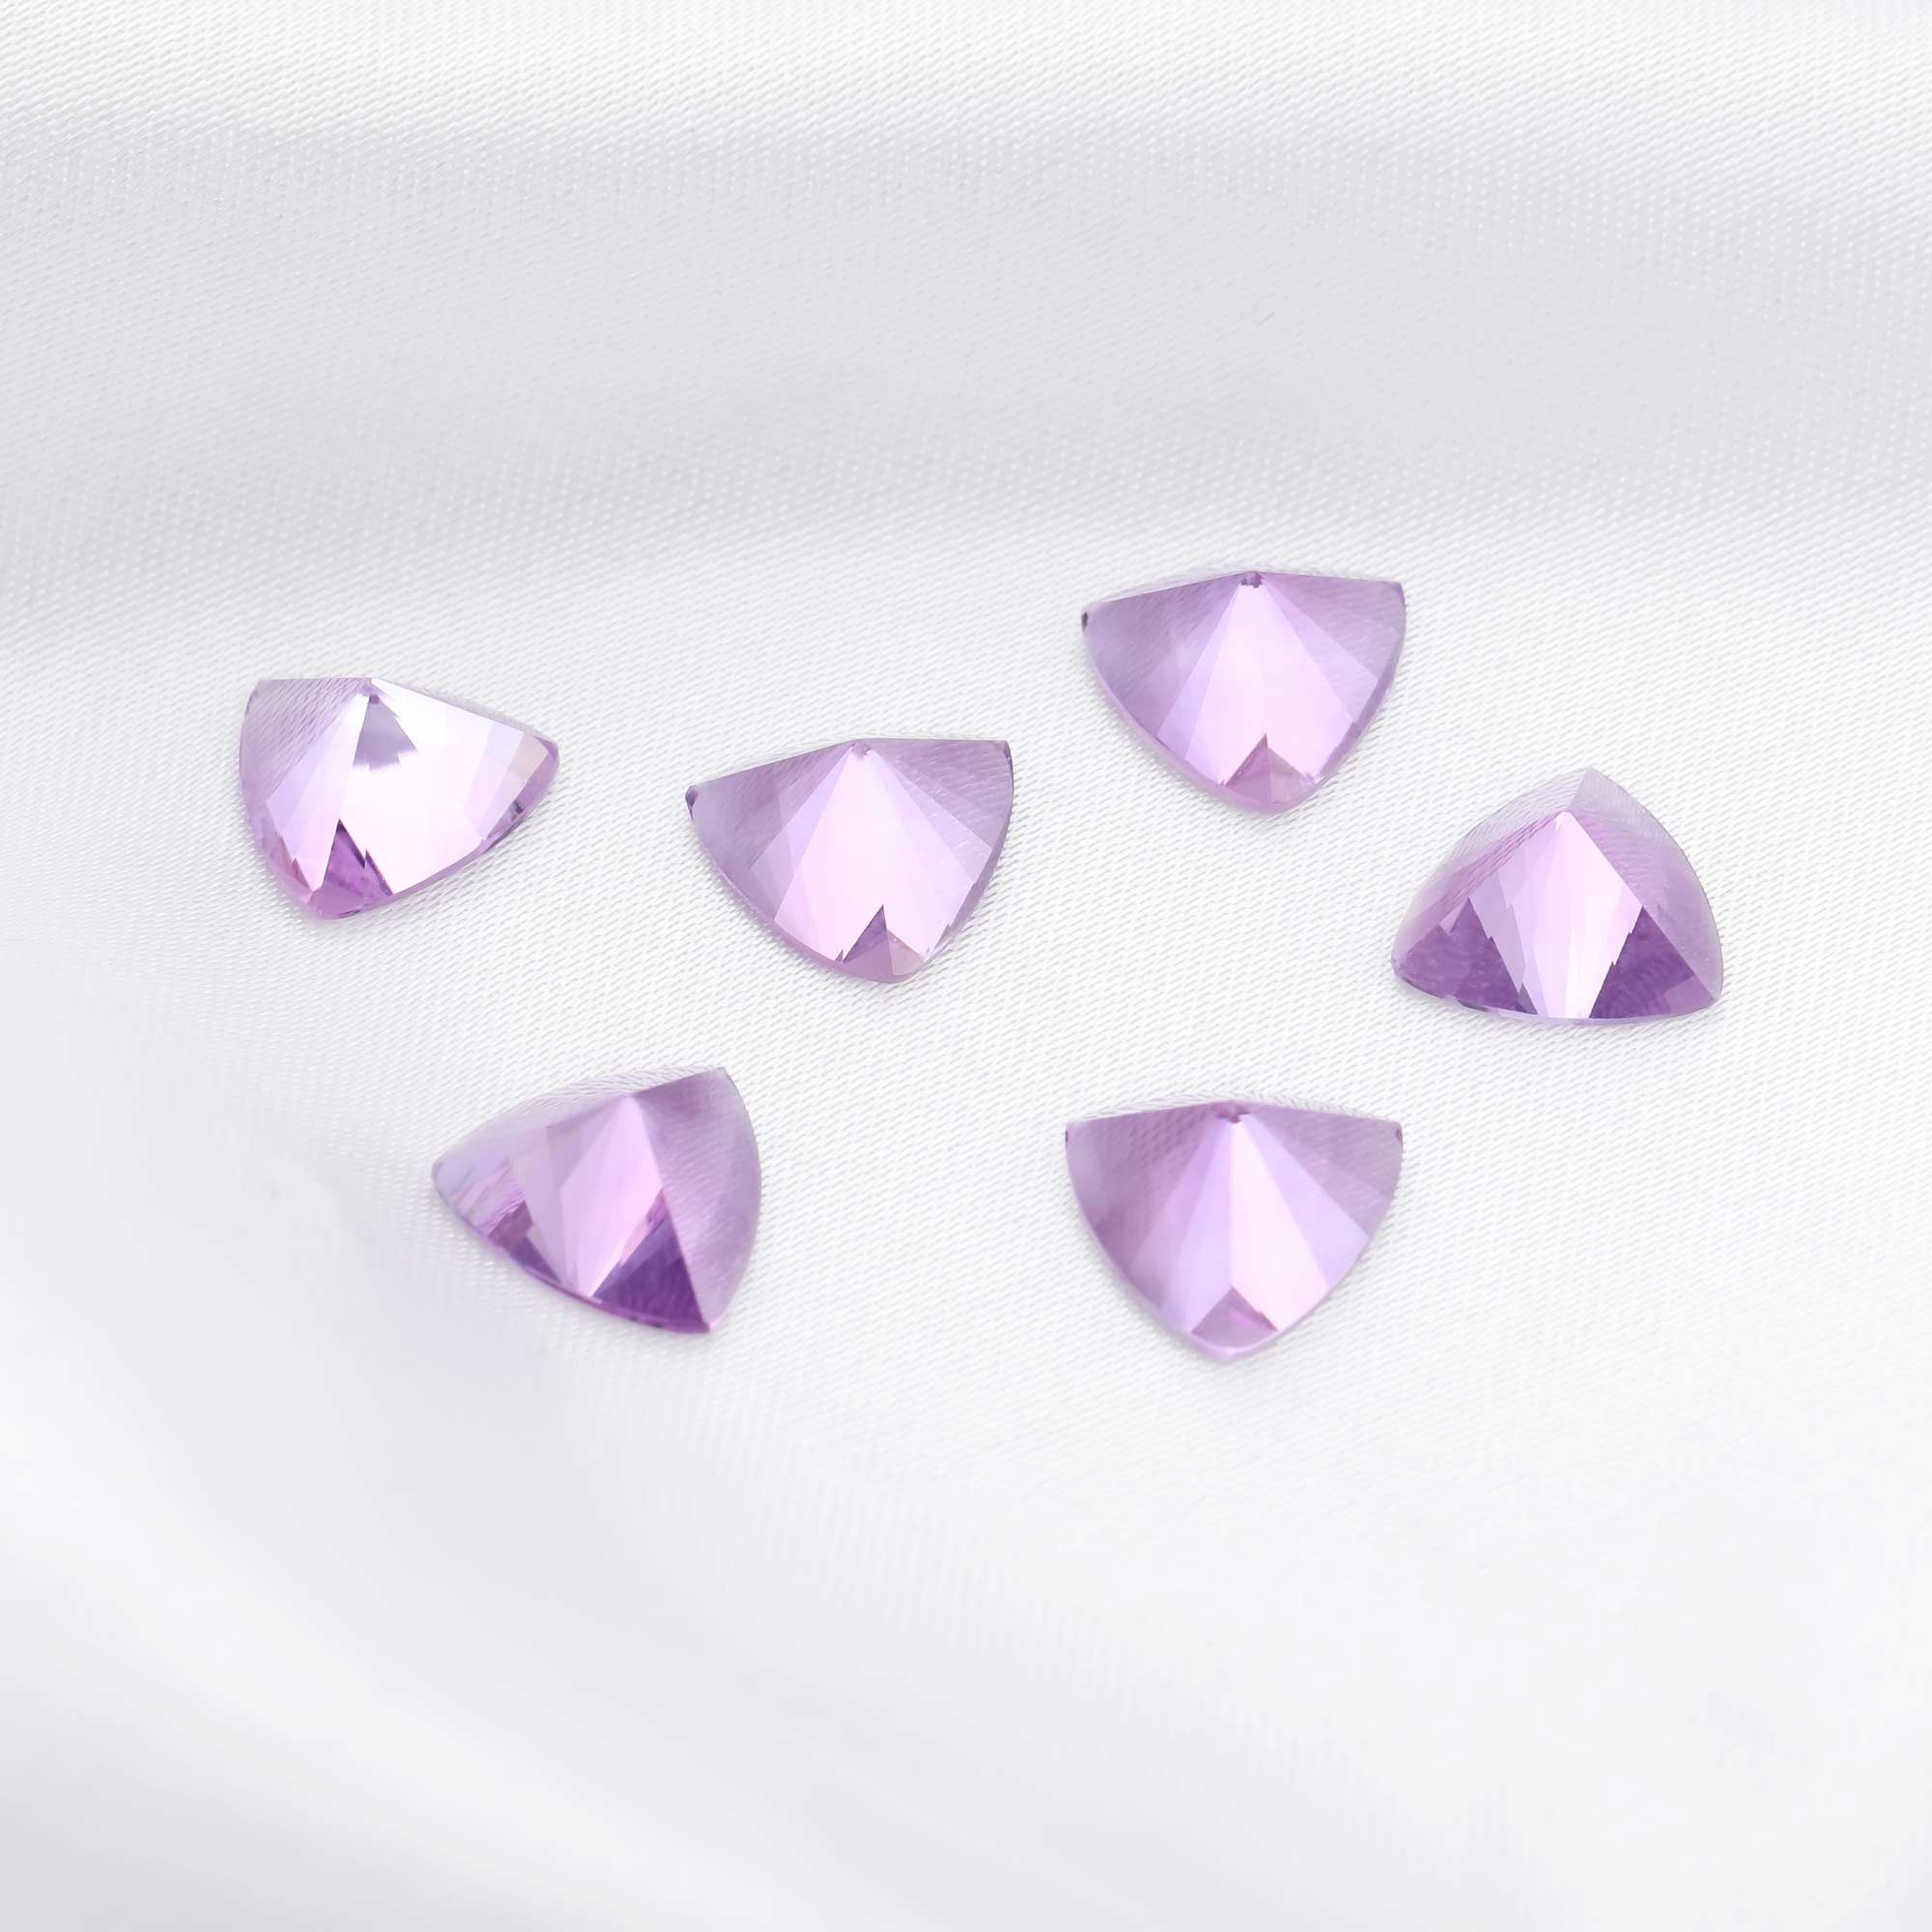 10MM Trillion Cut Nature Amethyst Gemstone,February Birthstone,Purple Triangle Gemstone,DIY Jewelry Supplies,2CT - Click Image to Close